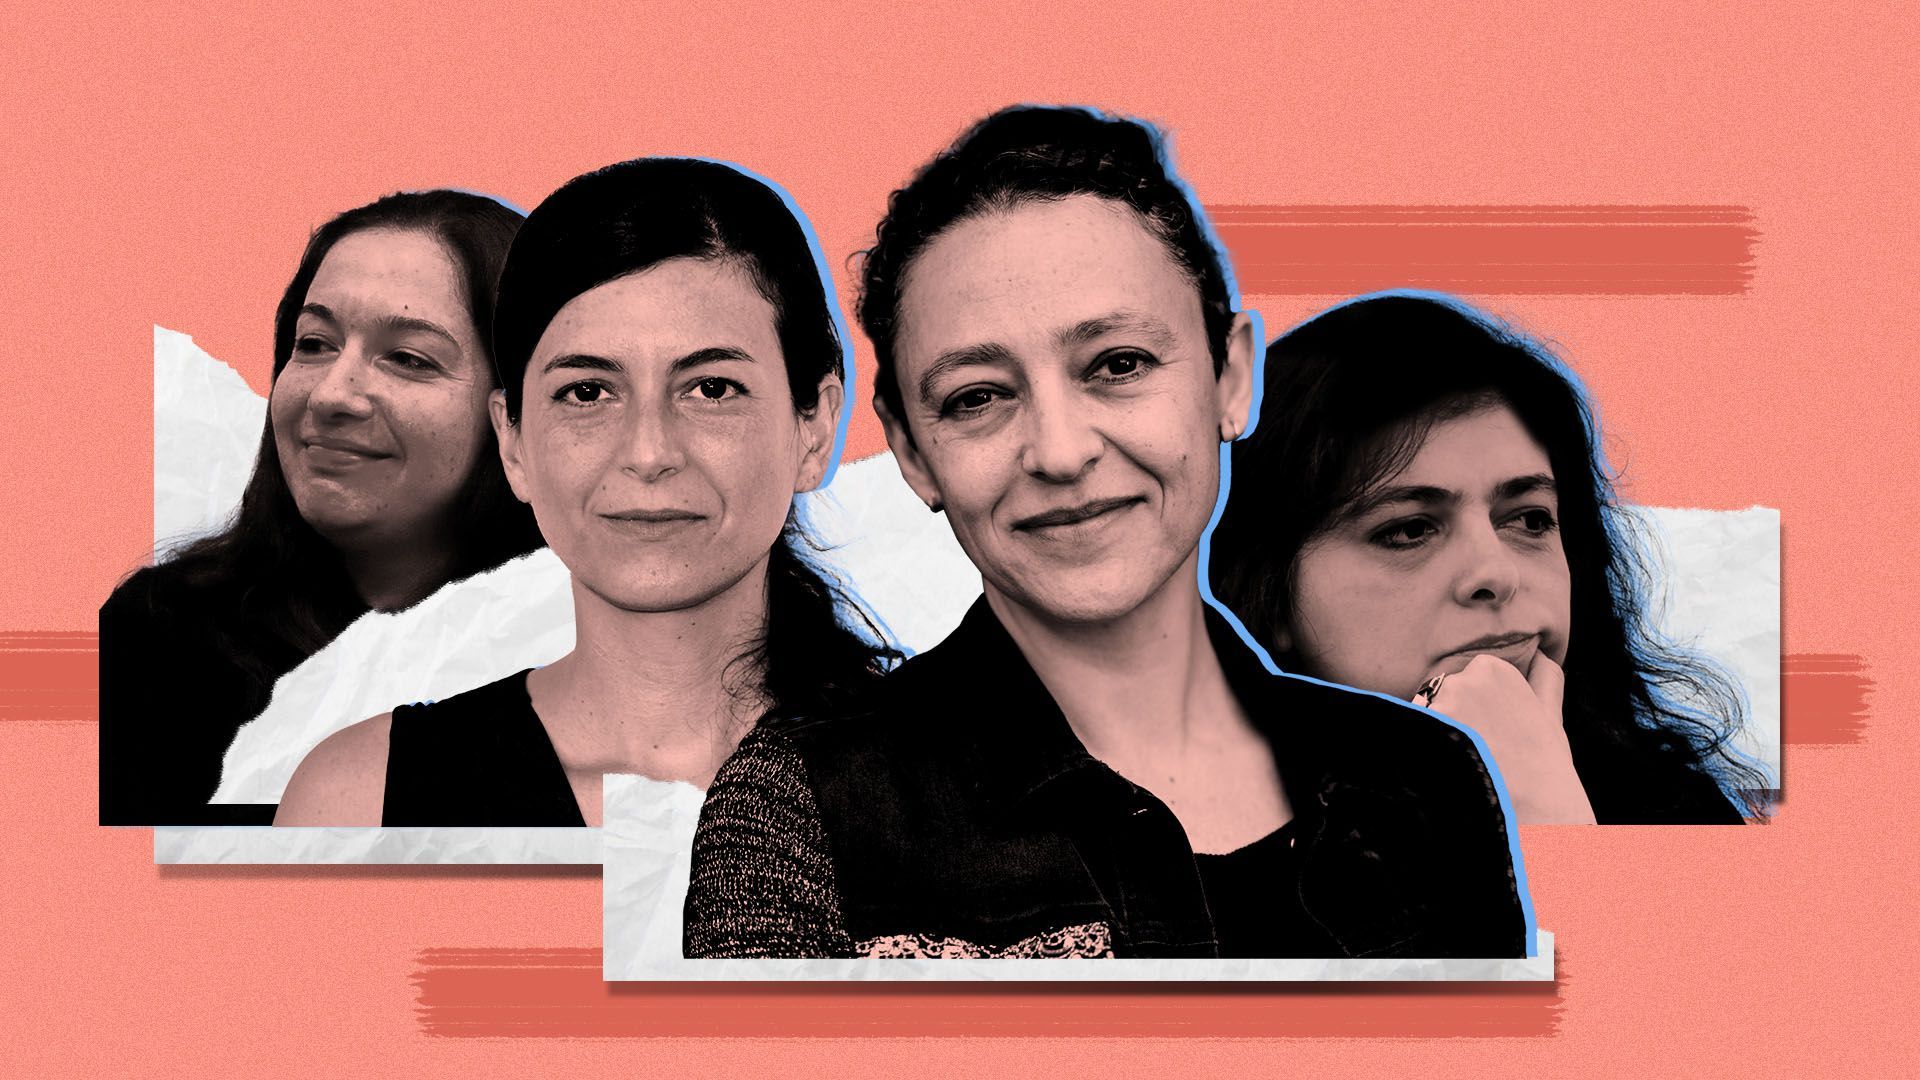 Photo illustration of authors Samantha Schweblin, Mariana Enríquez, Fernanda Melchor, and Lina Meruane